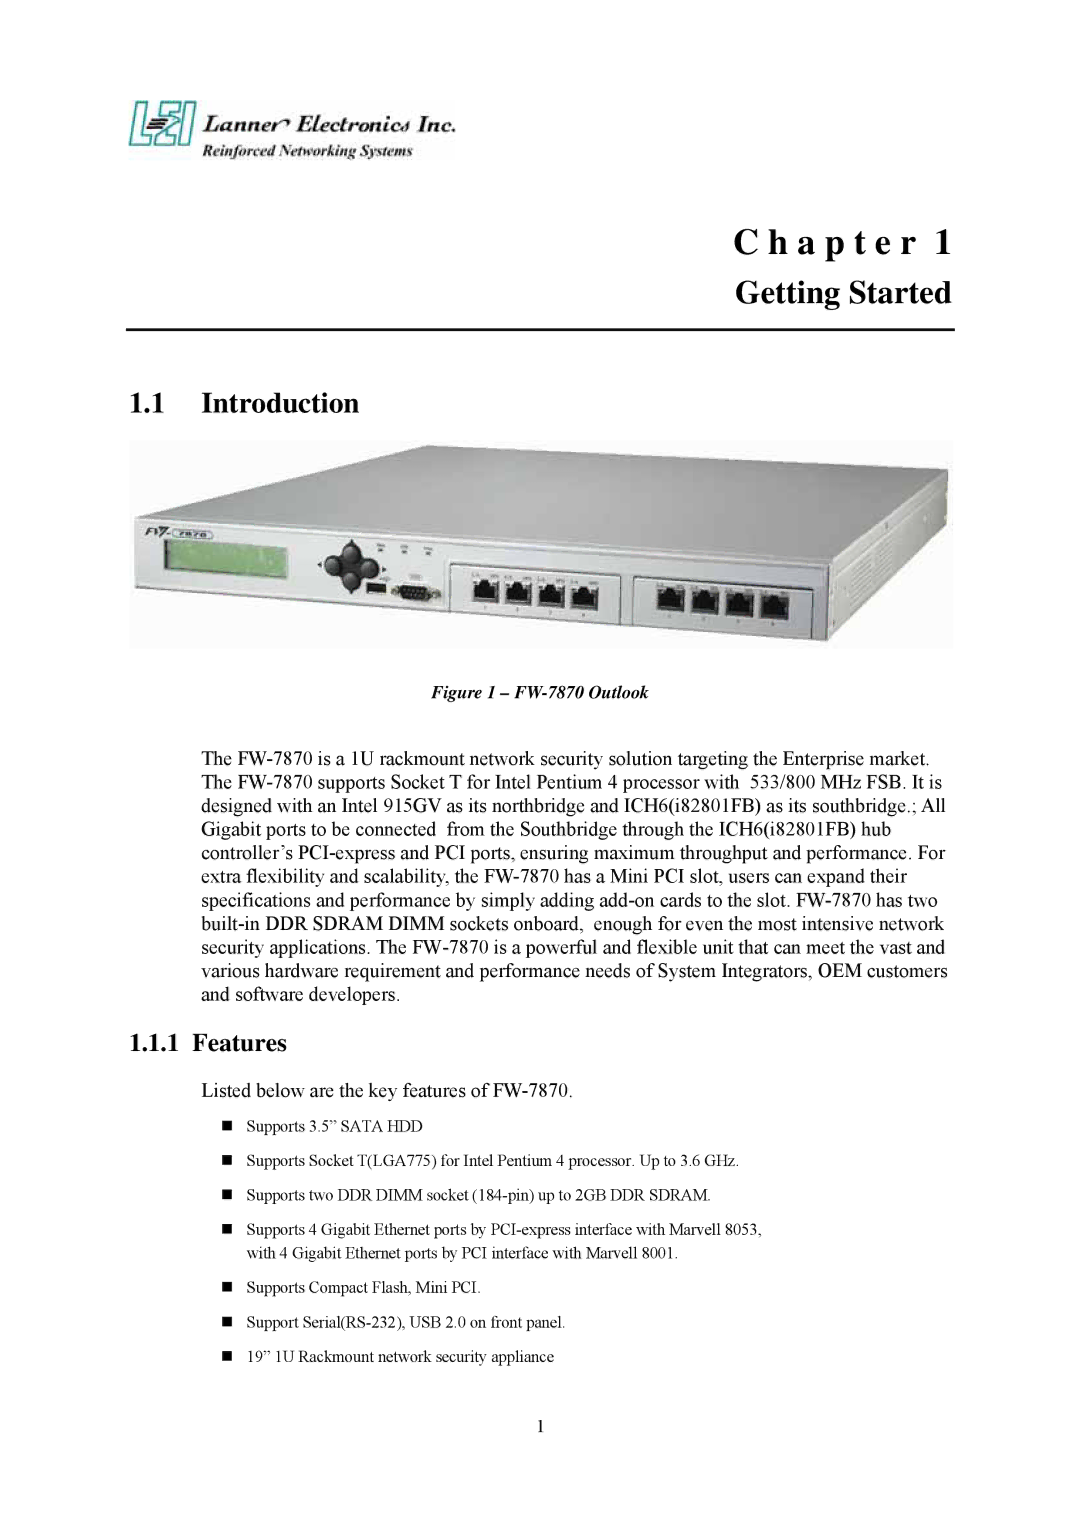 Lanner electronic 19" 1U Intel Pentium 4 Socket T Rackmount Network Security Platform Getting Started, Introduction 